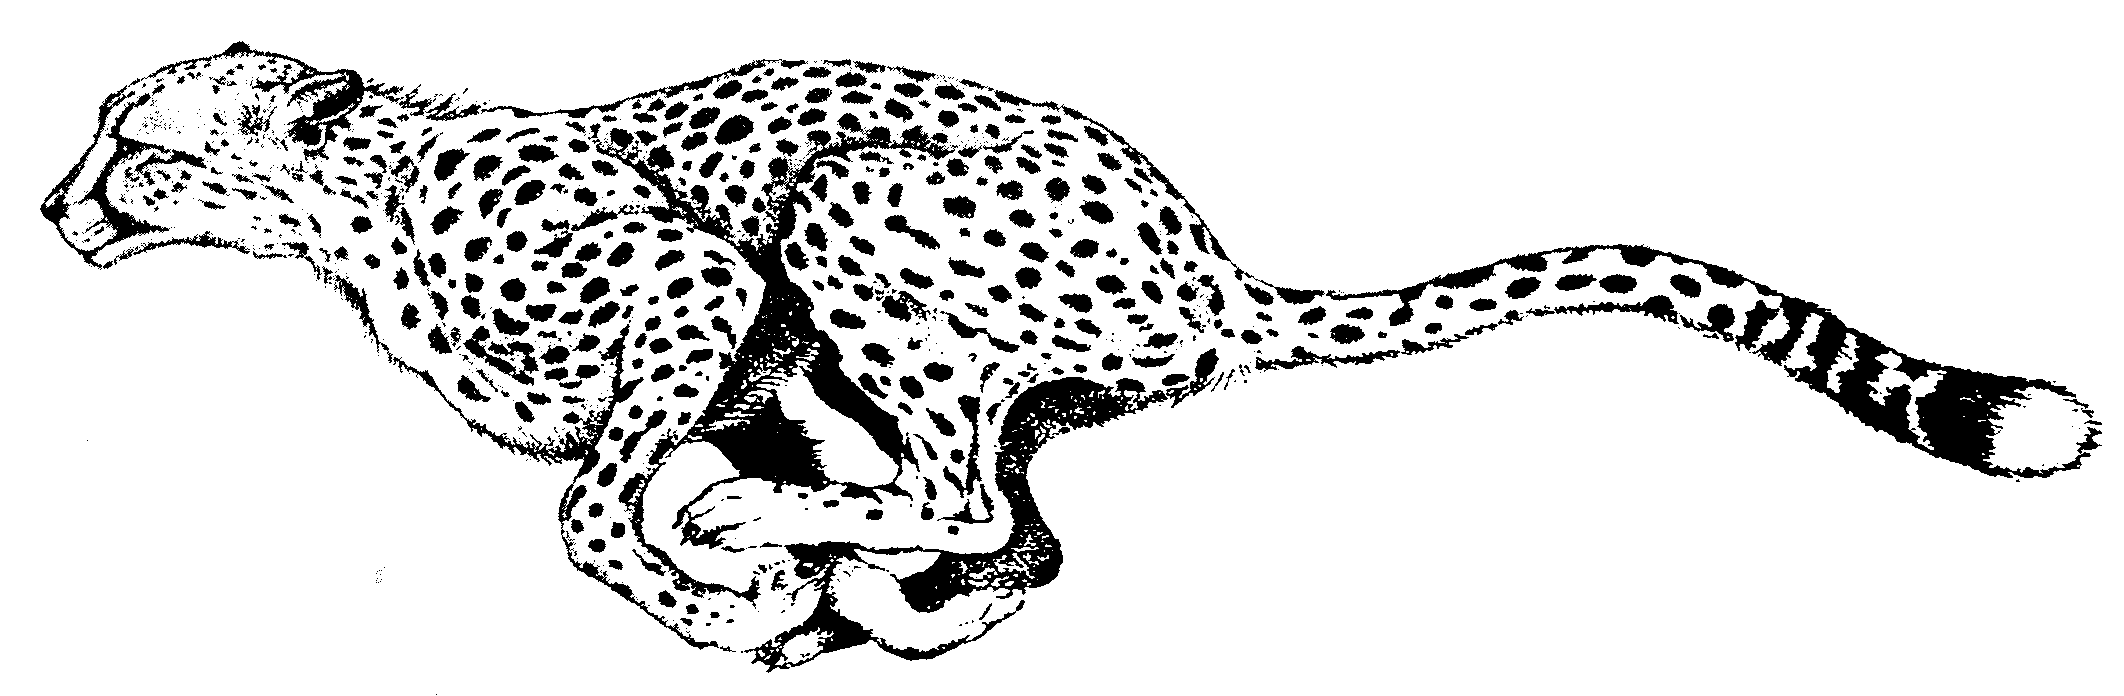 Free cheetah silhouette.